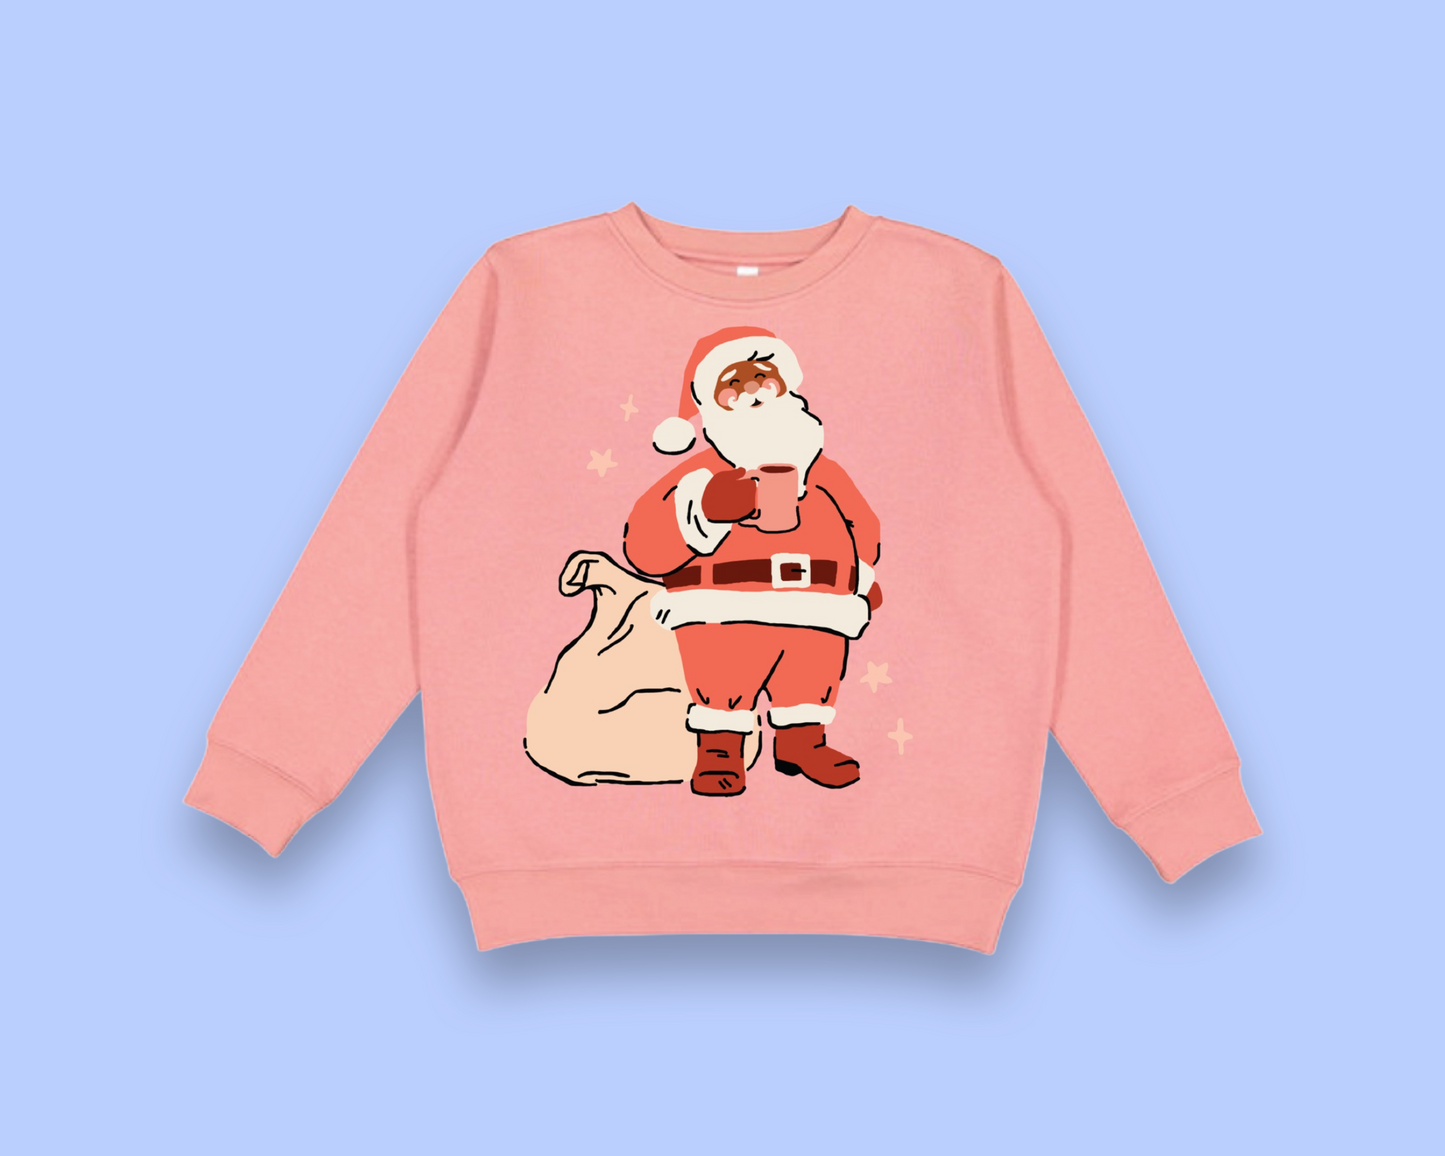 Santa Sweatshirt - Pink/Dark Skin